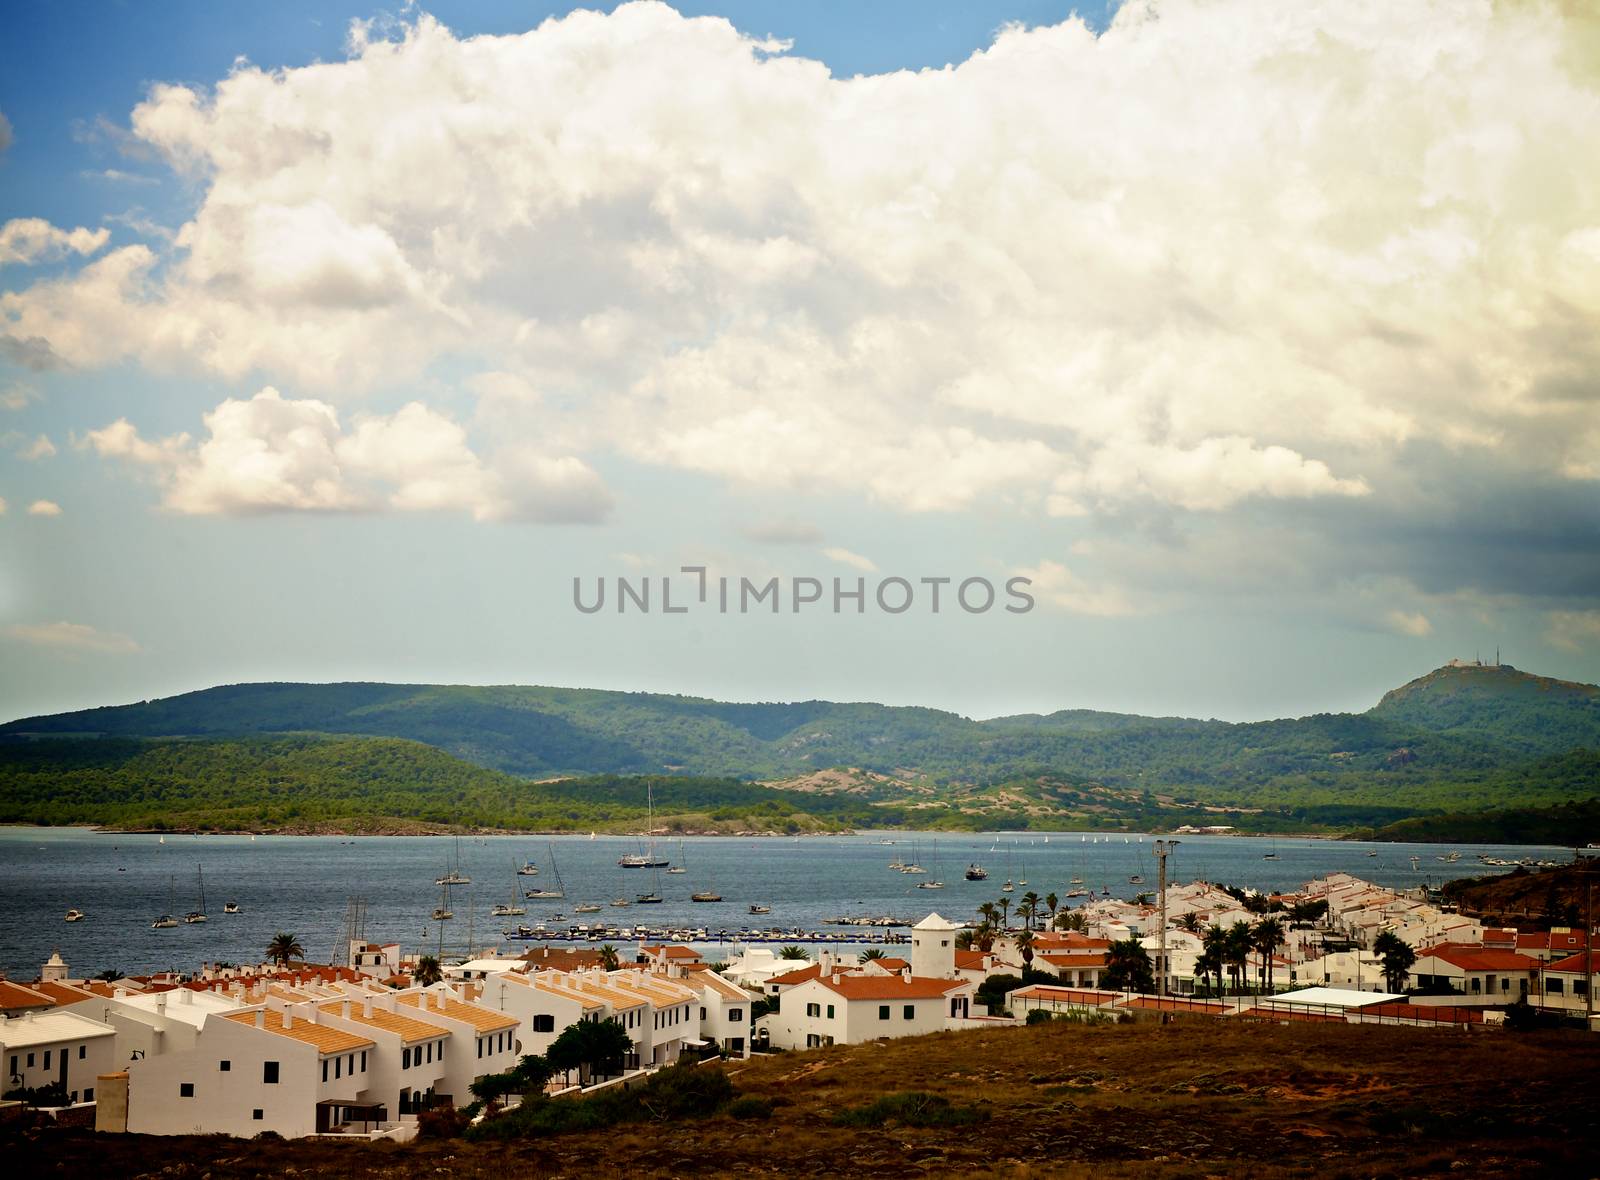 Small Menorca Urbanization Fornells between Hills and near Yacht Marina under Cloudy Skies Outdoors. Balearic Islands